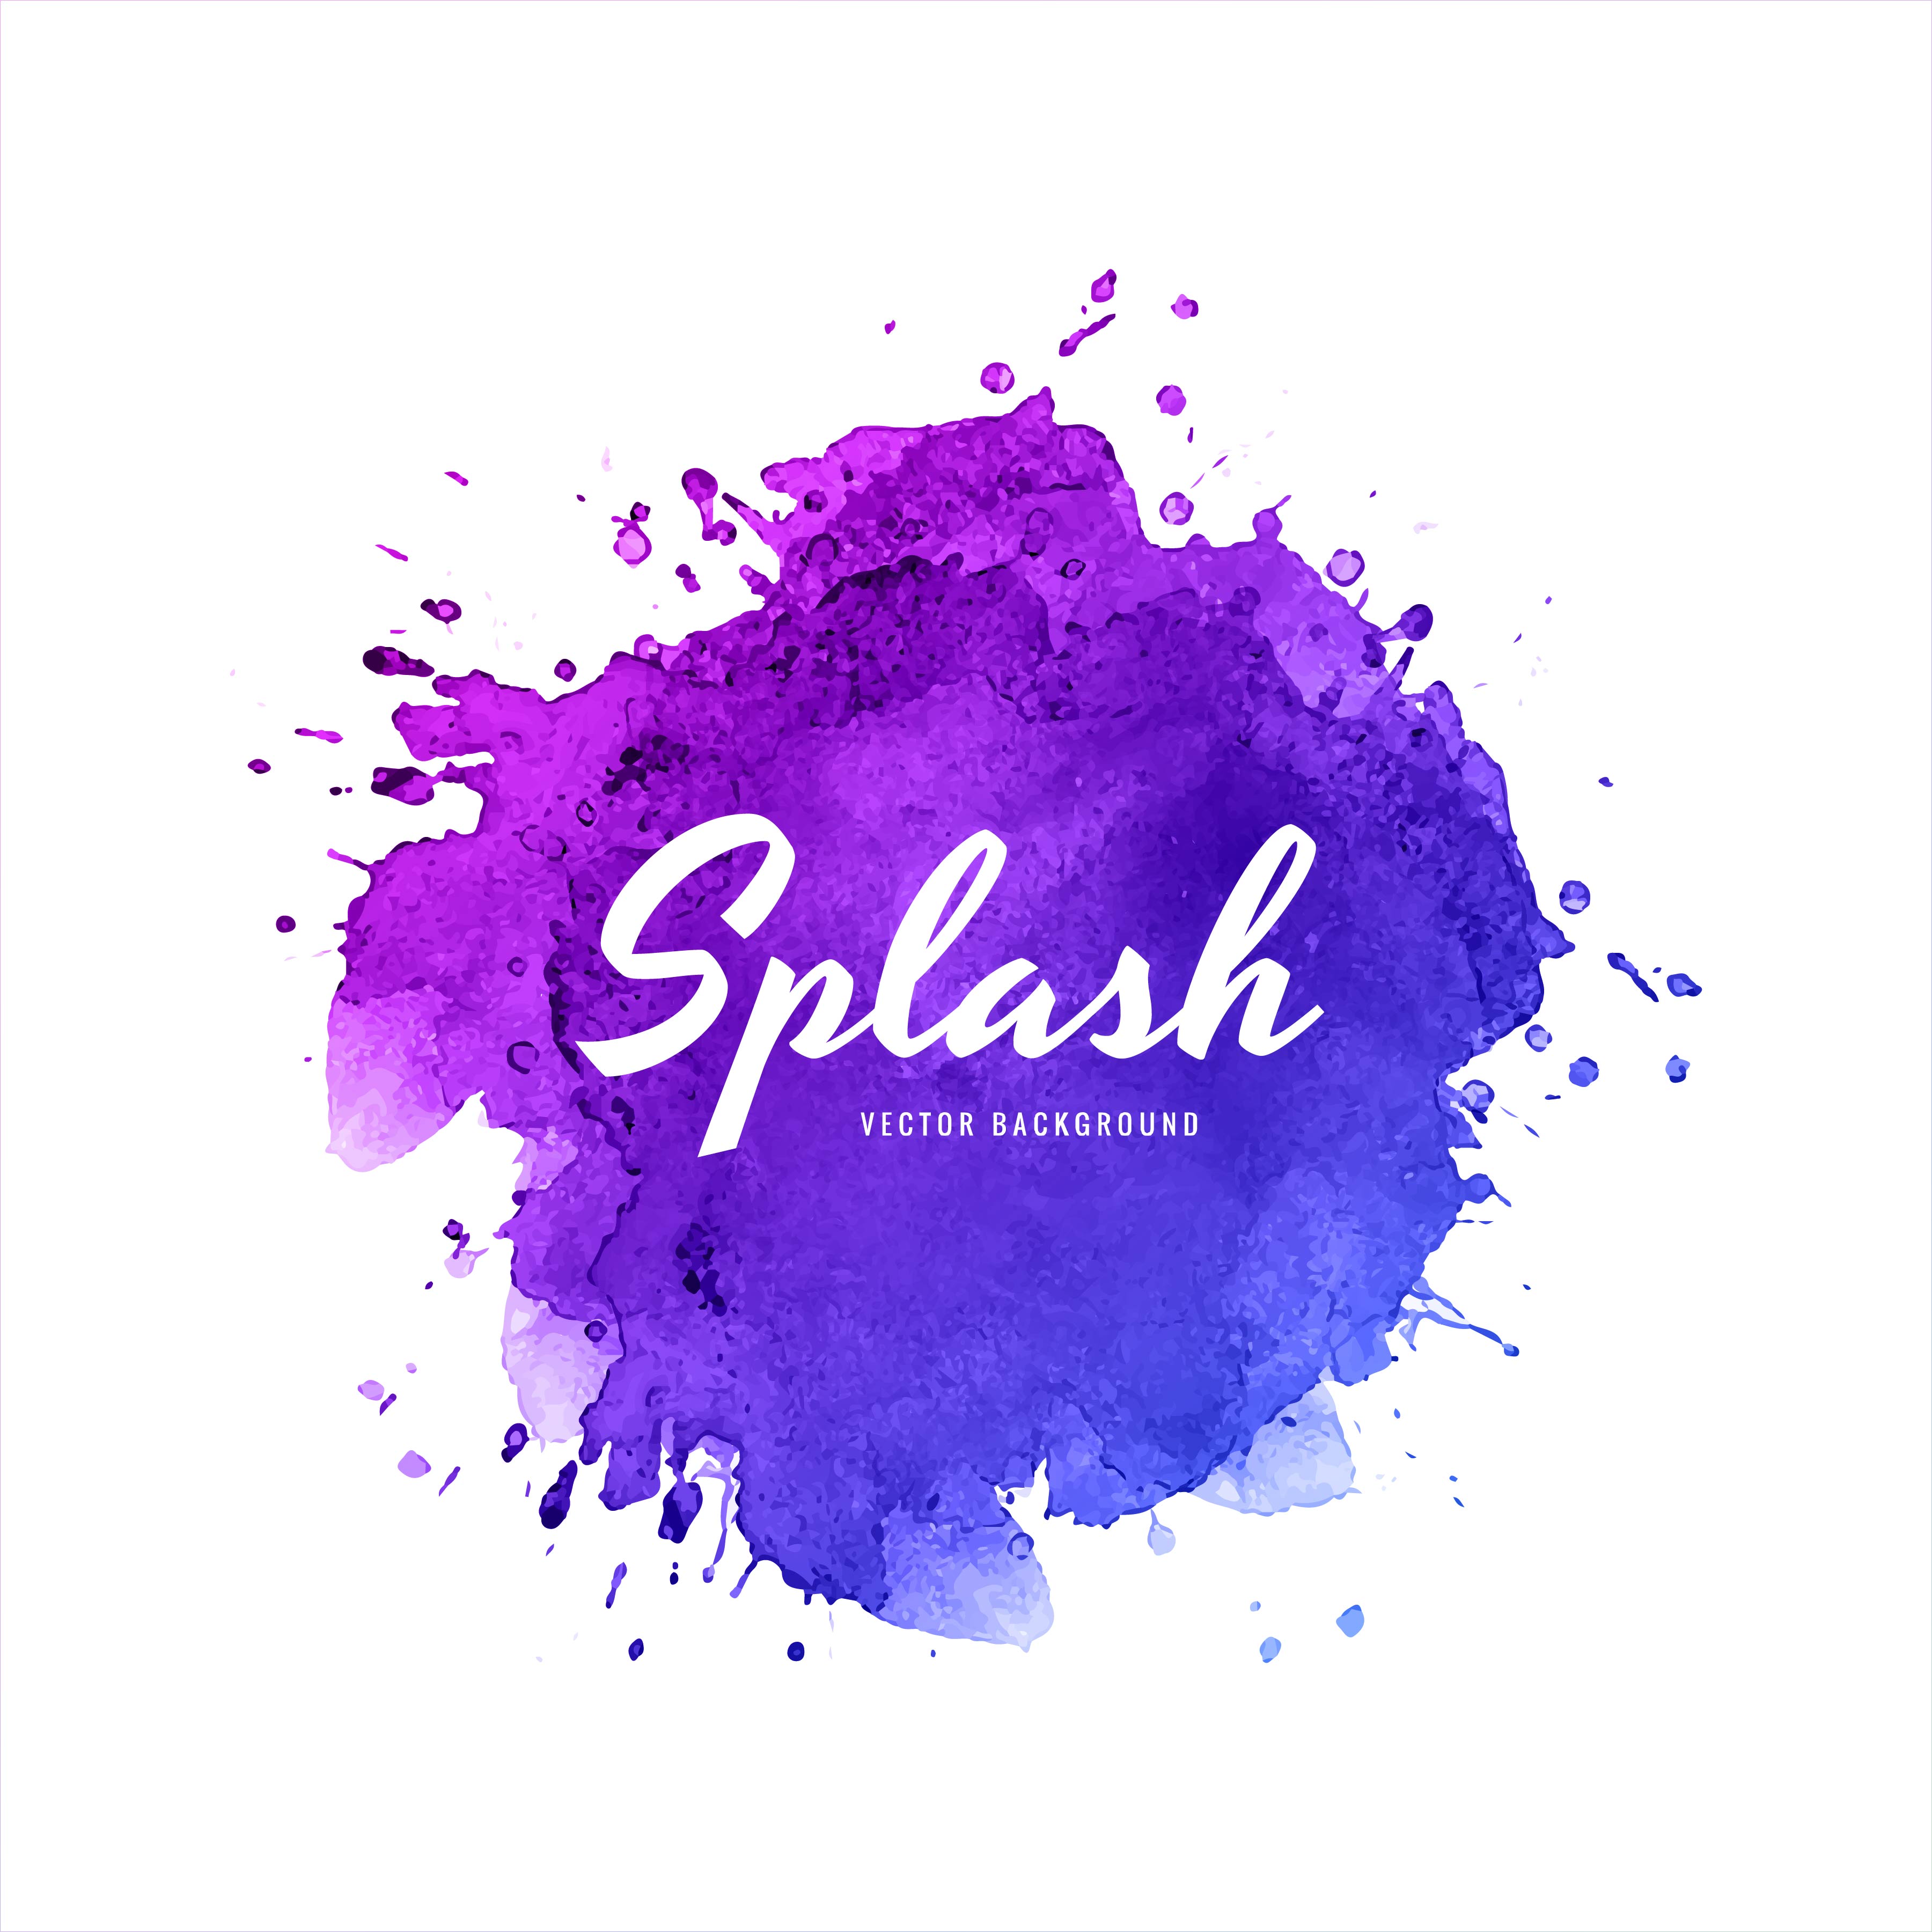 Download Elegant colorful splash watercolor background - Download Free Vectors, Clipart Graphics & Vector Art